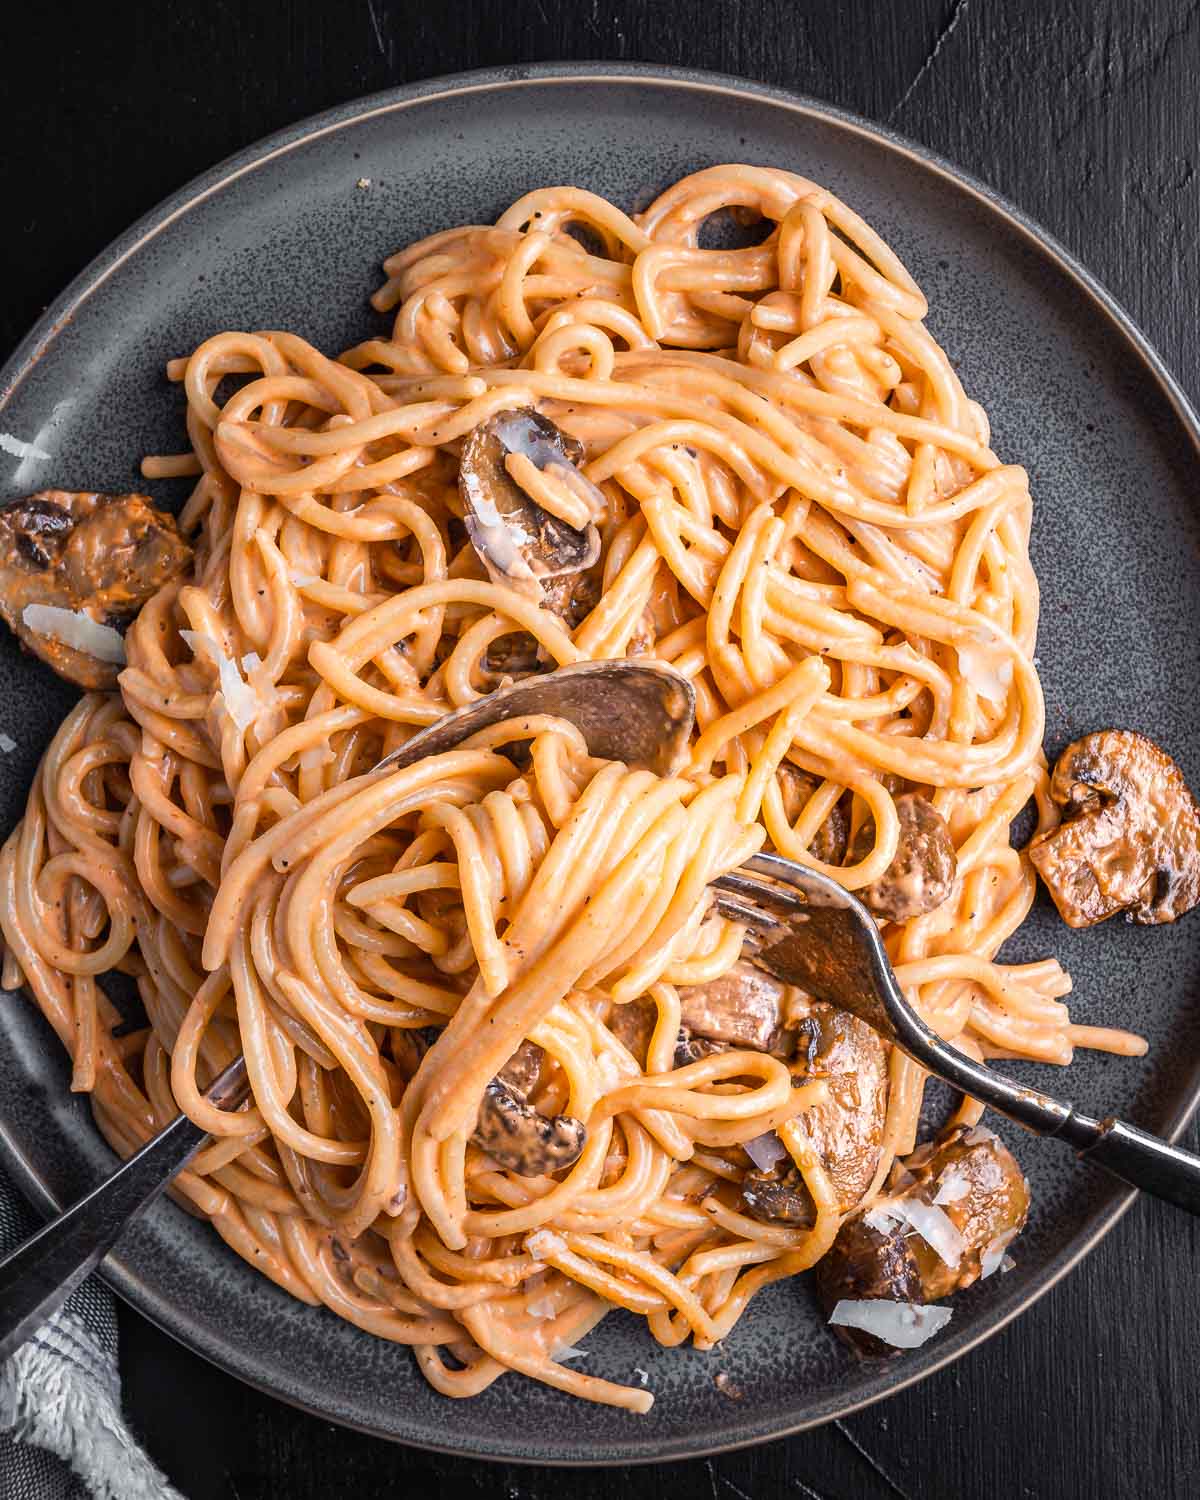 Mushroom brandy cream sauce spaghetti in grey plate on black board.